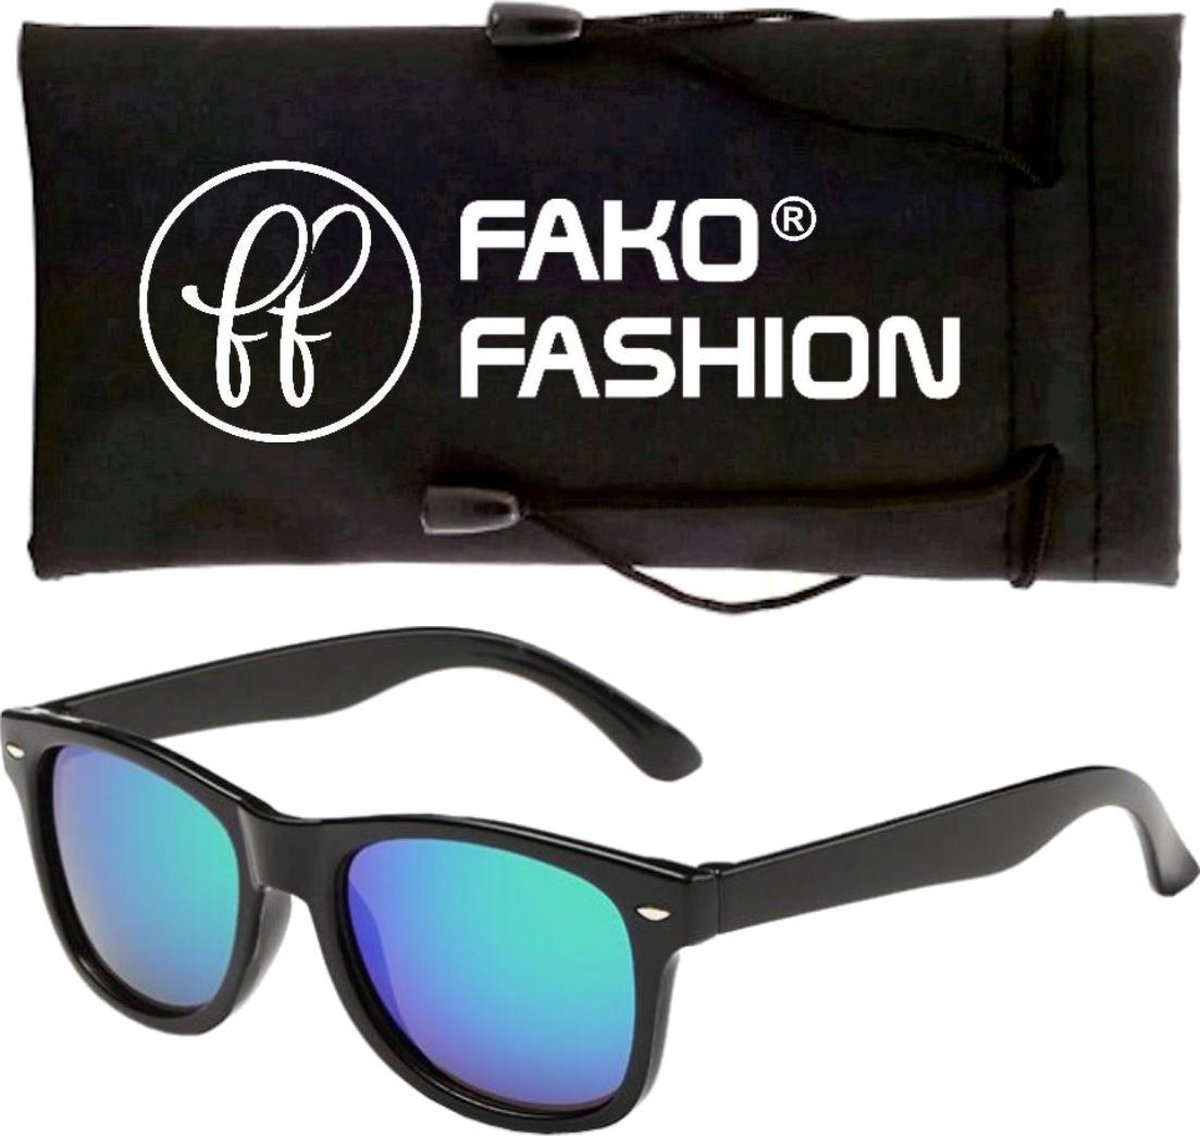 Fako Fashion® - Zonnebril - Kids - Spiegel Groen